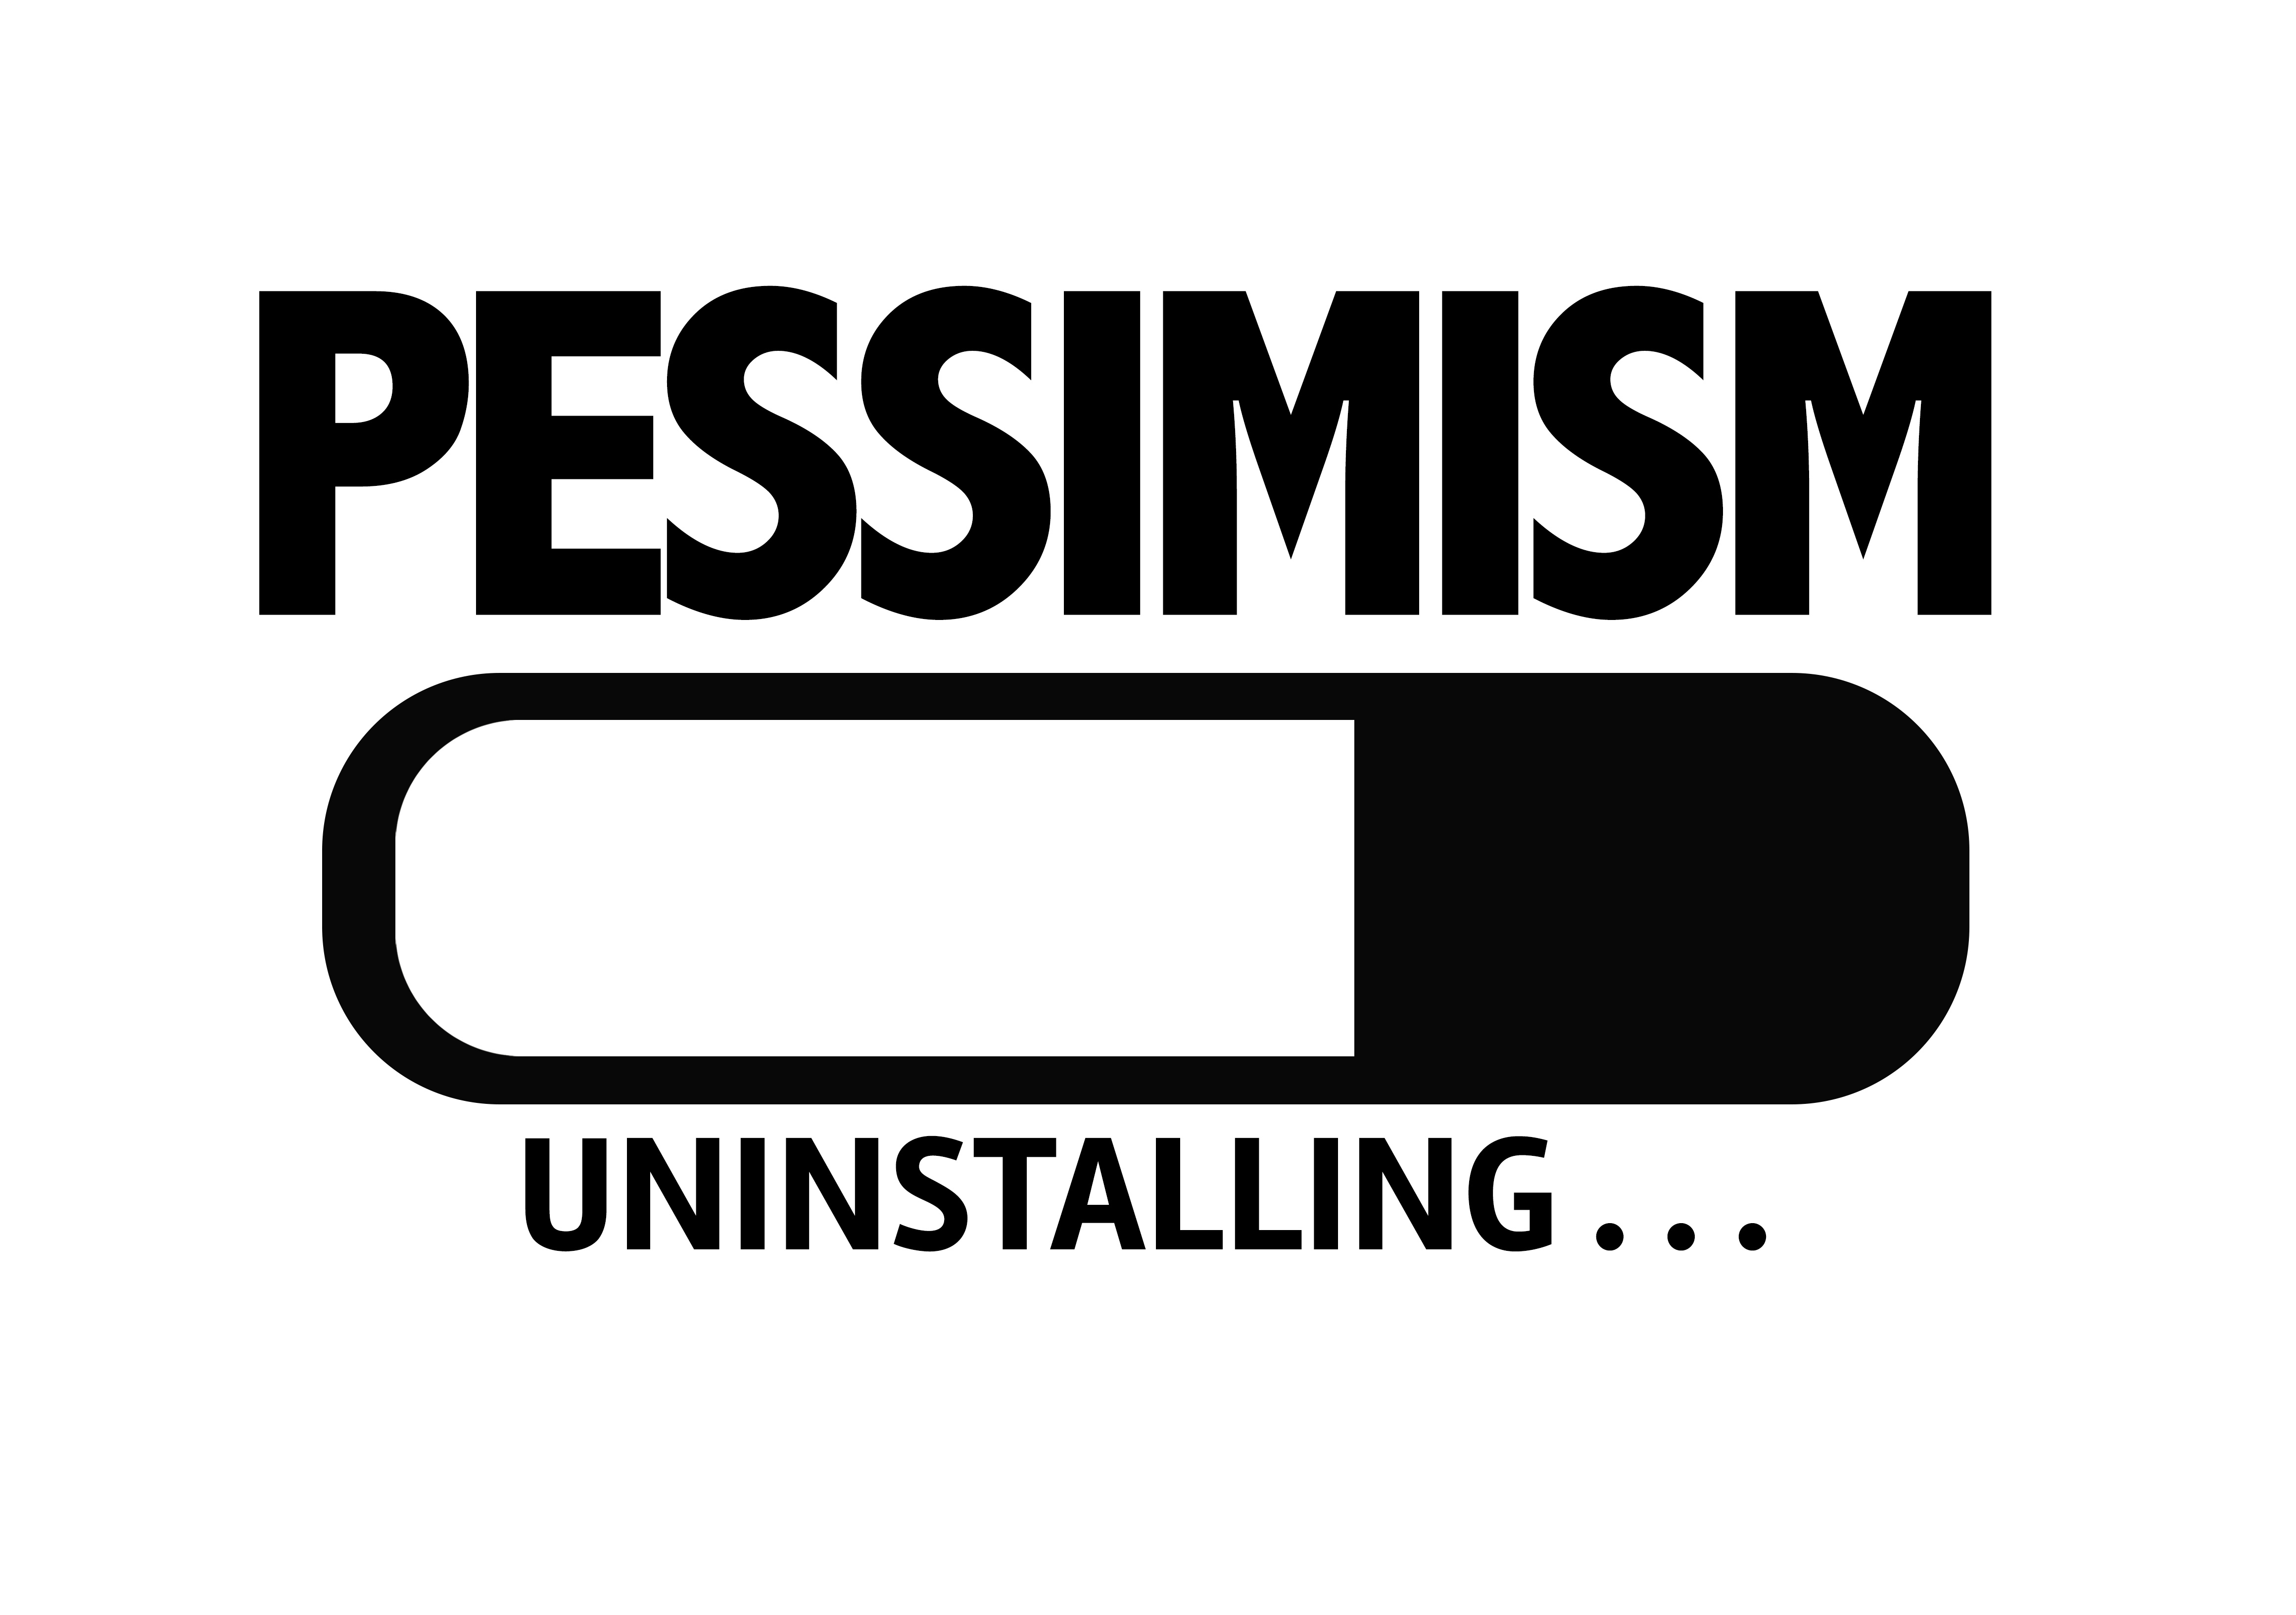 Progress Bar Uninstalling with the text: Pessimism